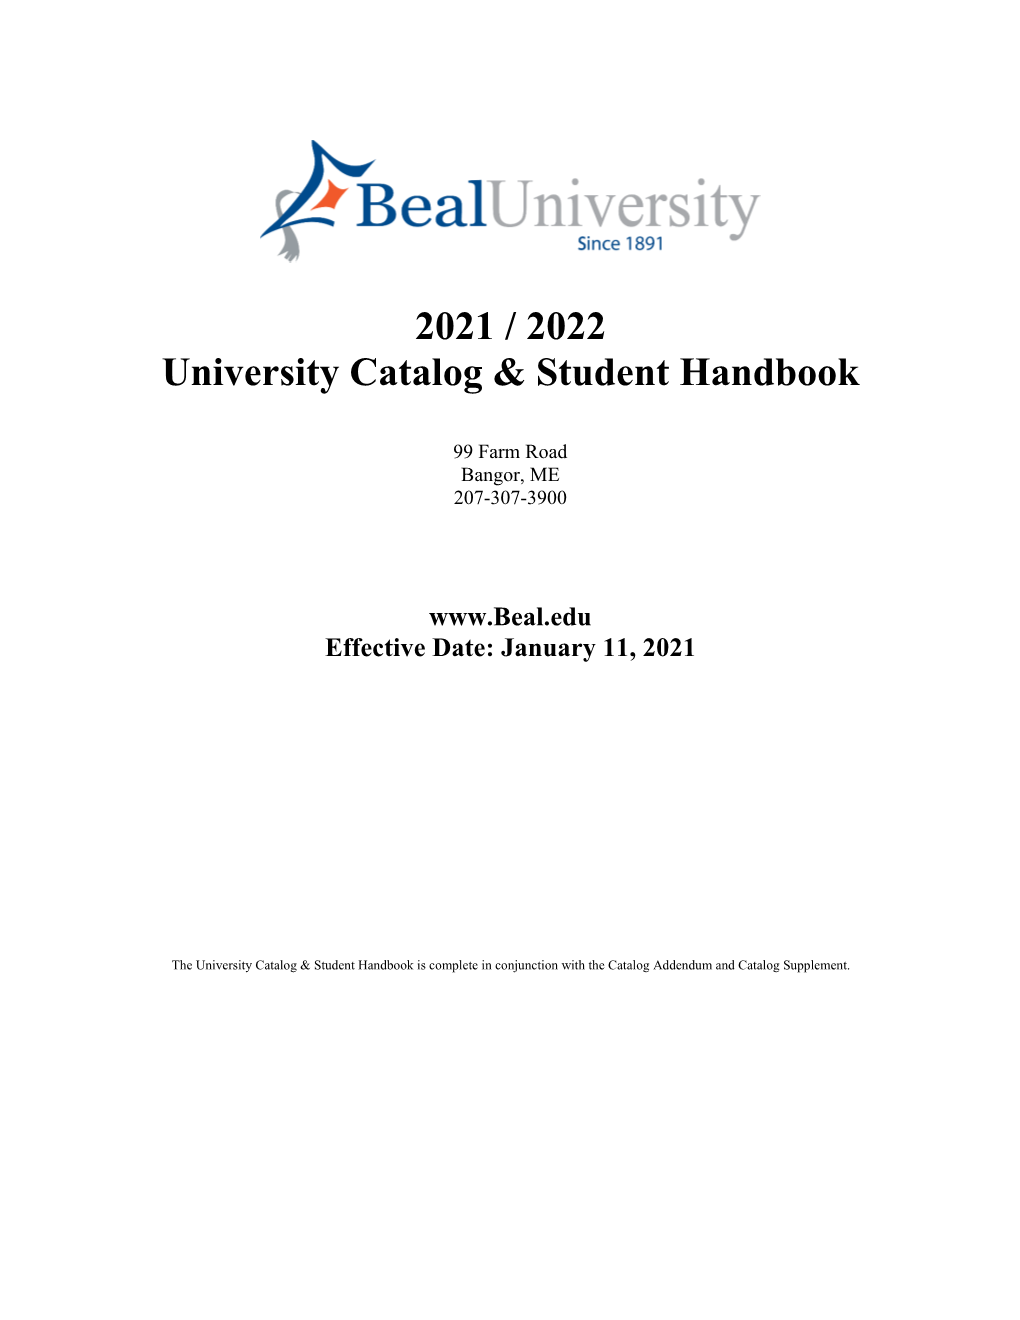 2021 / 2022 University Catalog & Student Handbook